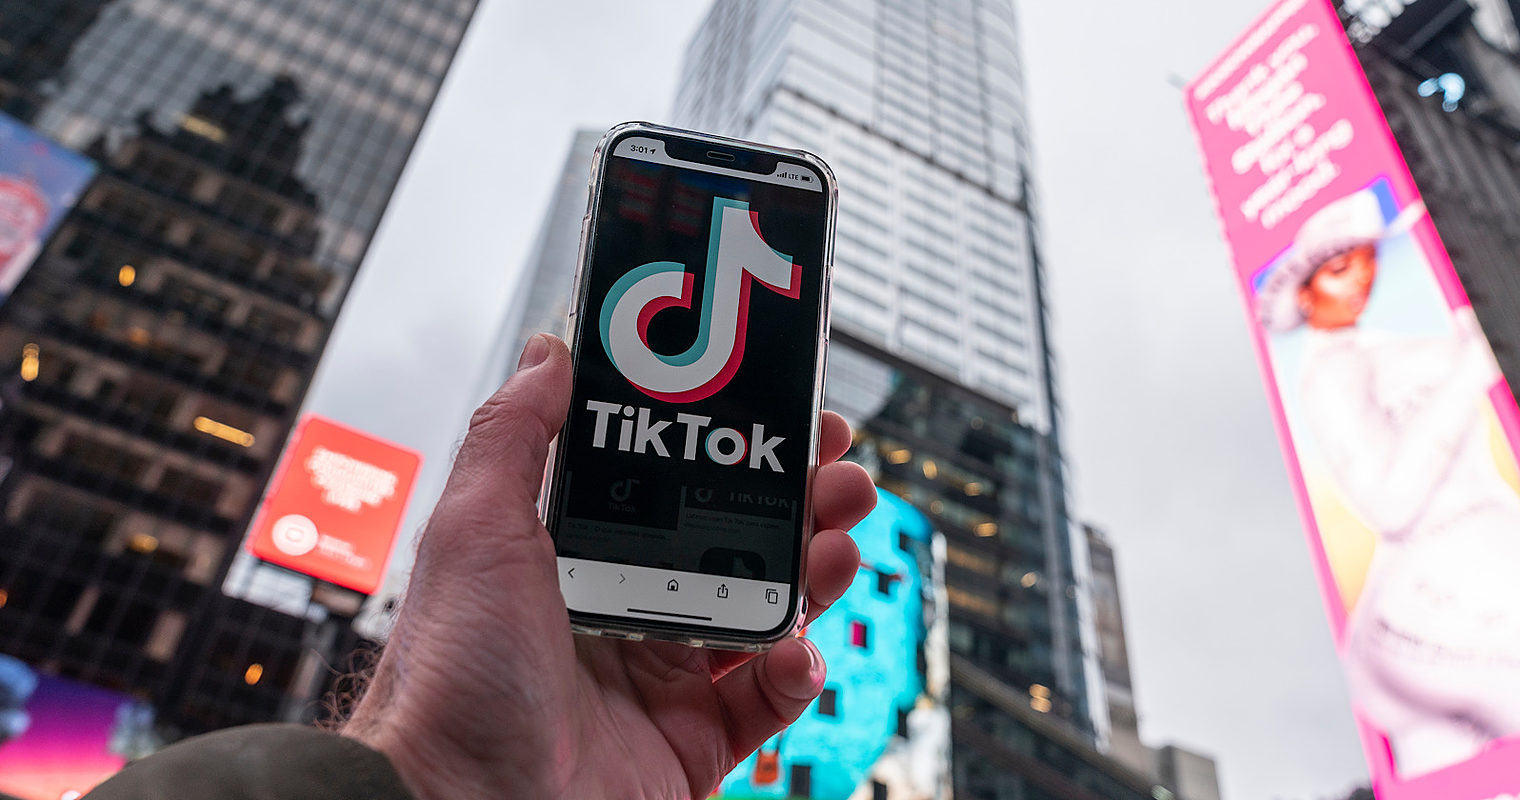 TikTok Beats Facebook in Time Spent Per User